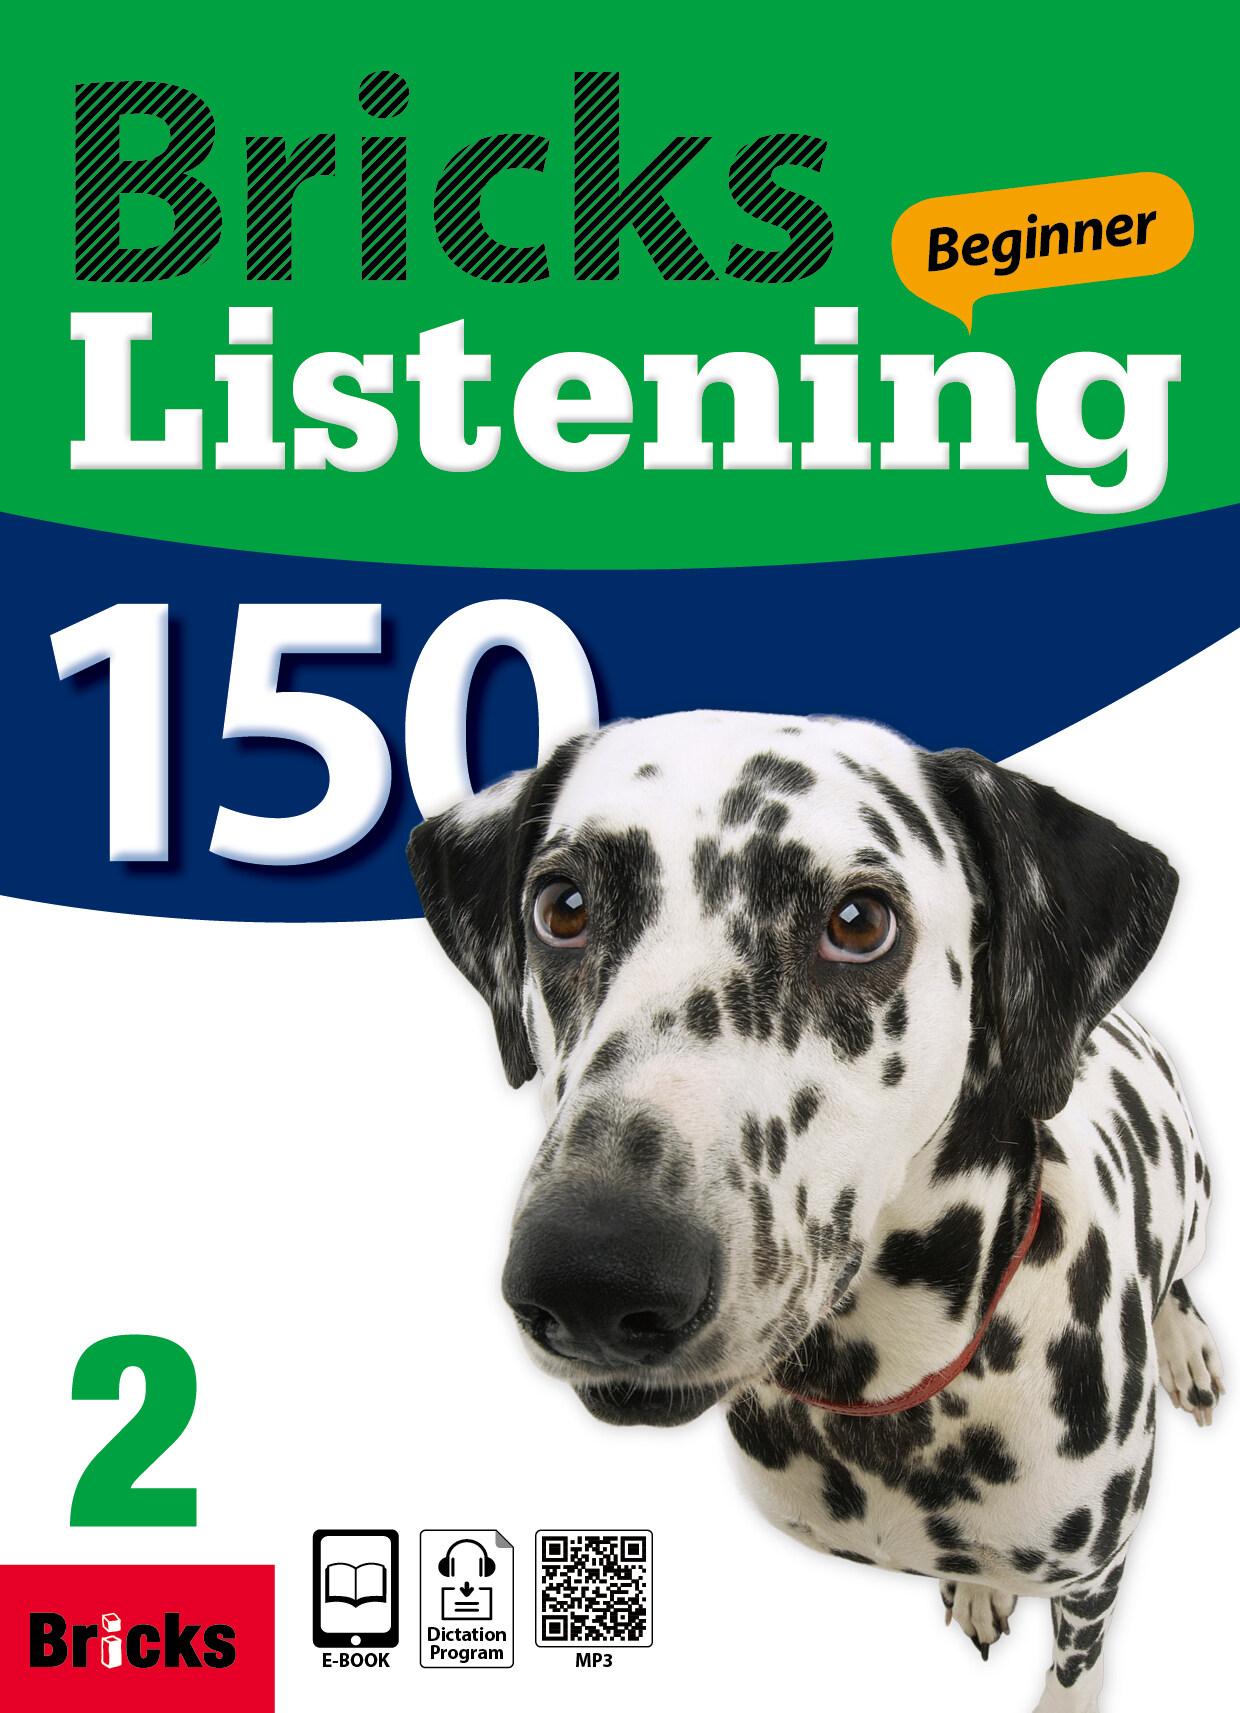 Bricks Listening Beginner 150 Level 2 (Student Book + Workbook + e-Book & Dictation Progr)